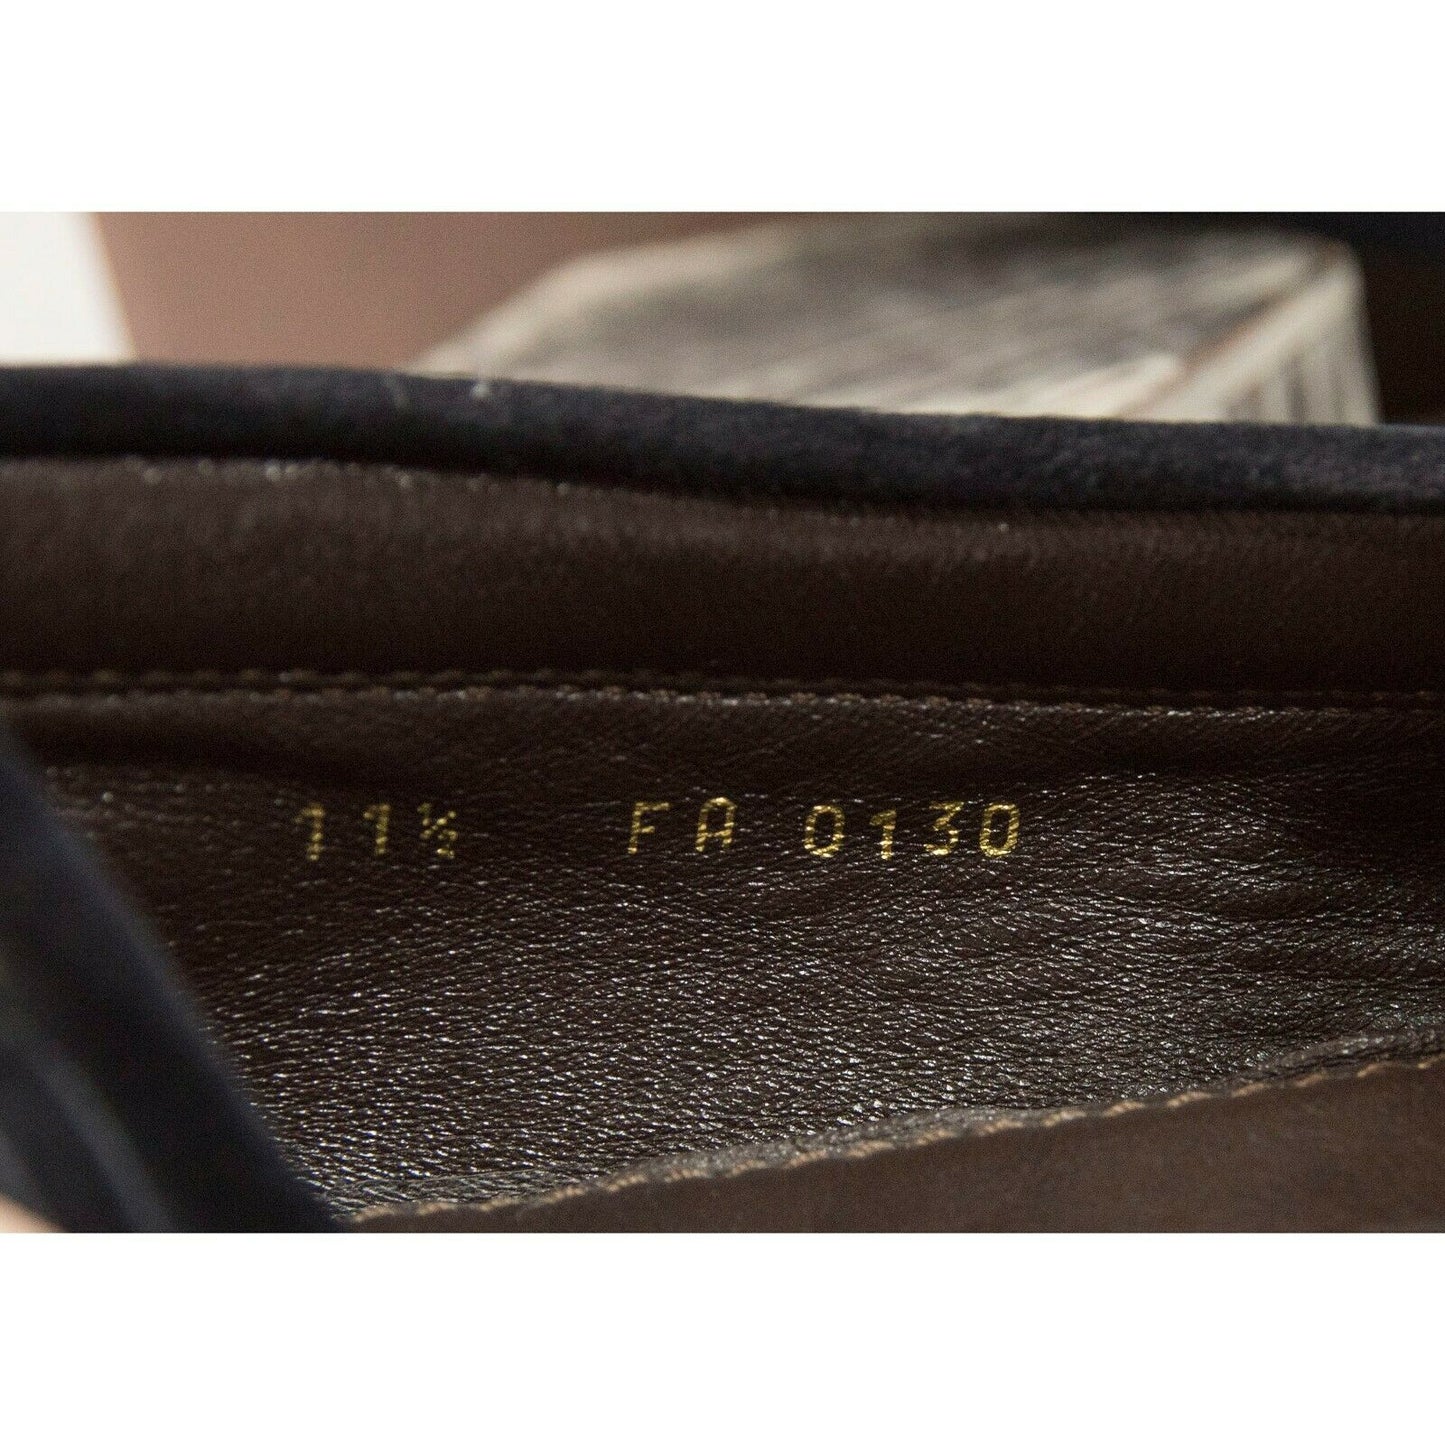 Louis Vuitton Tassel Navy Suede Vintage Loafer Driving Moccasin Sz 11.5